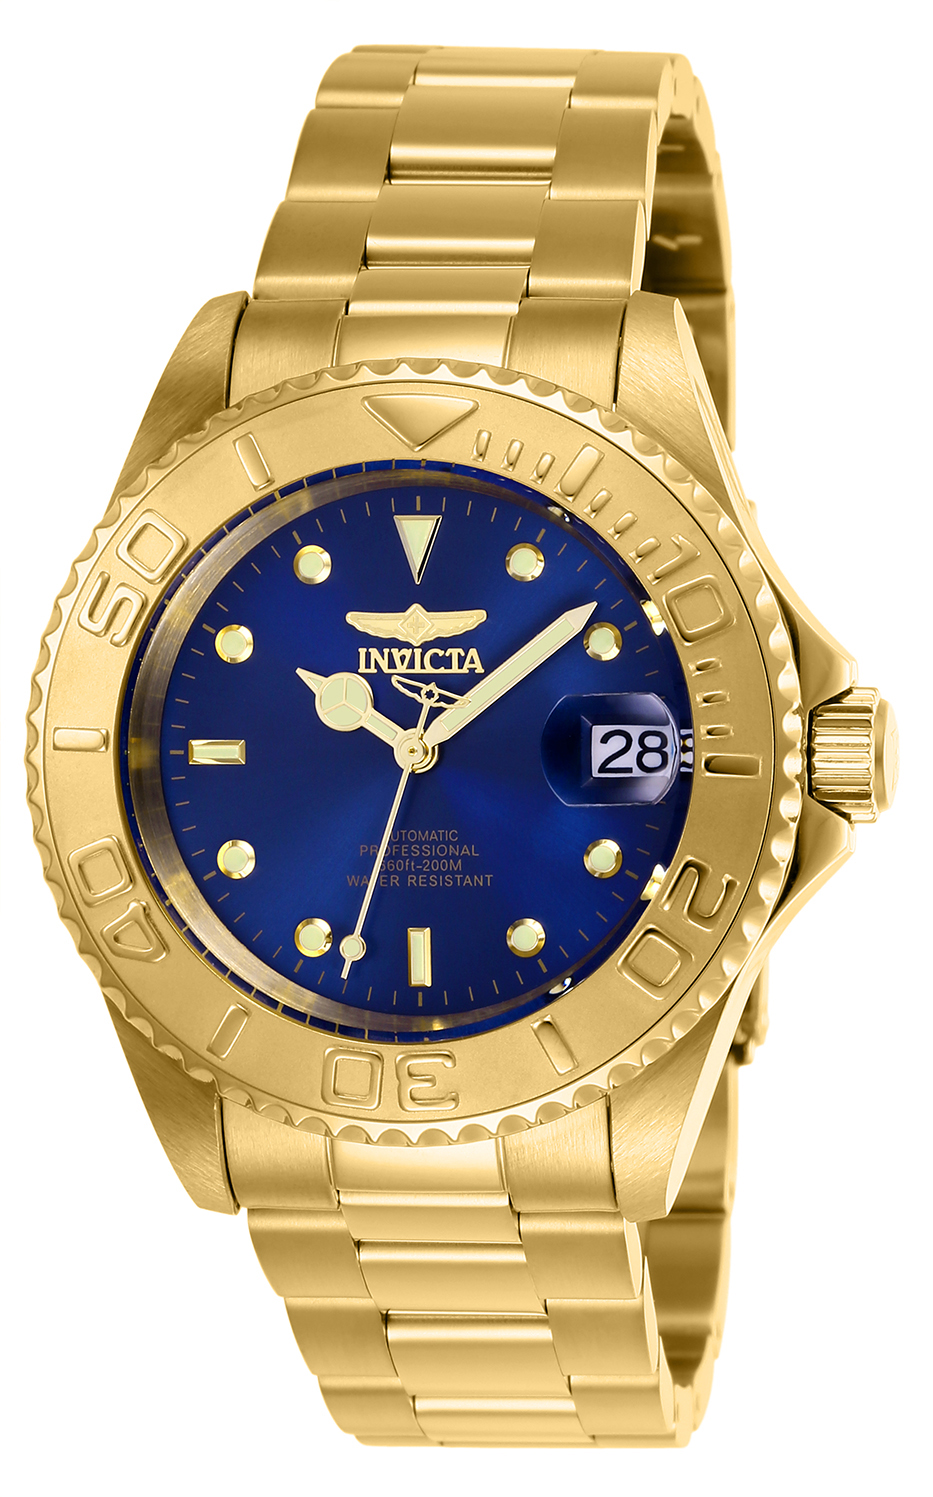 Invicta Pro Diver Automatic Men's Watch - 40mm, Gold (26997)